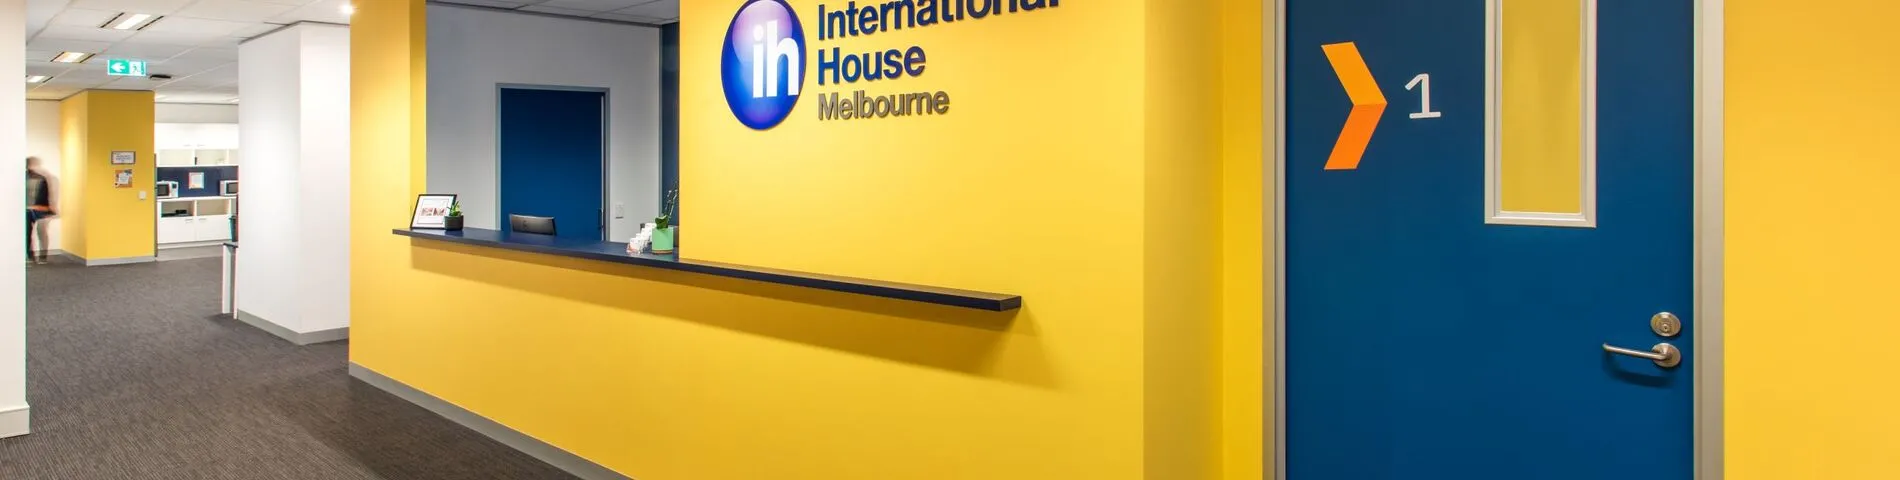 International House bild 1